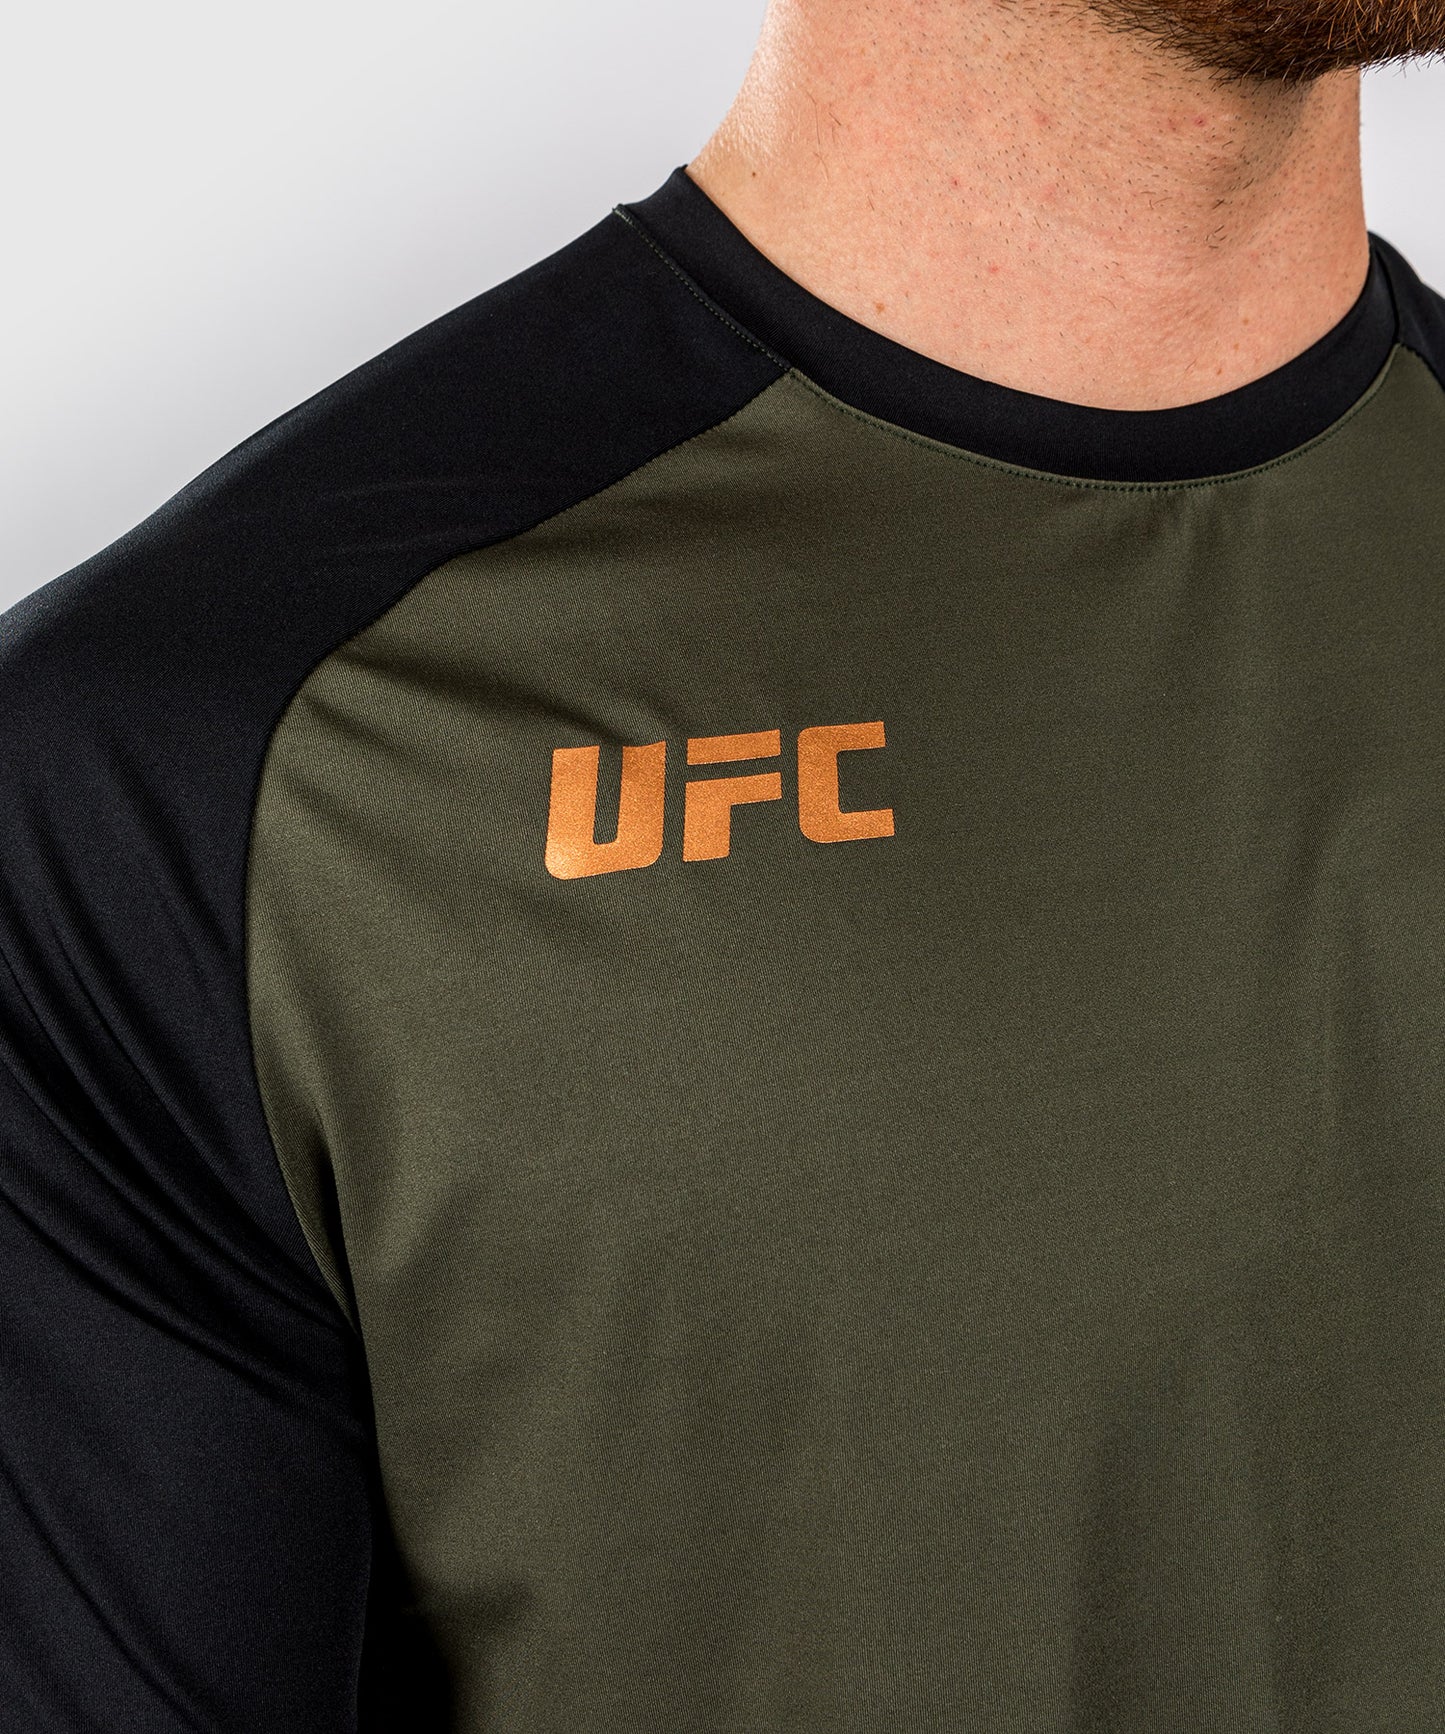 UFC Adrenaline by Venum Fight Week Heren-T-shirt Dry-tech - Kaki/Brons